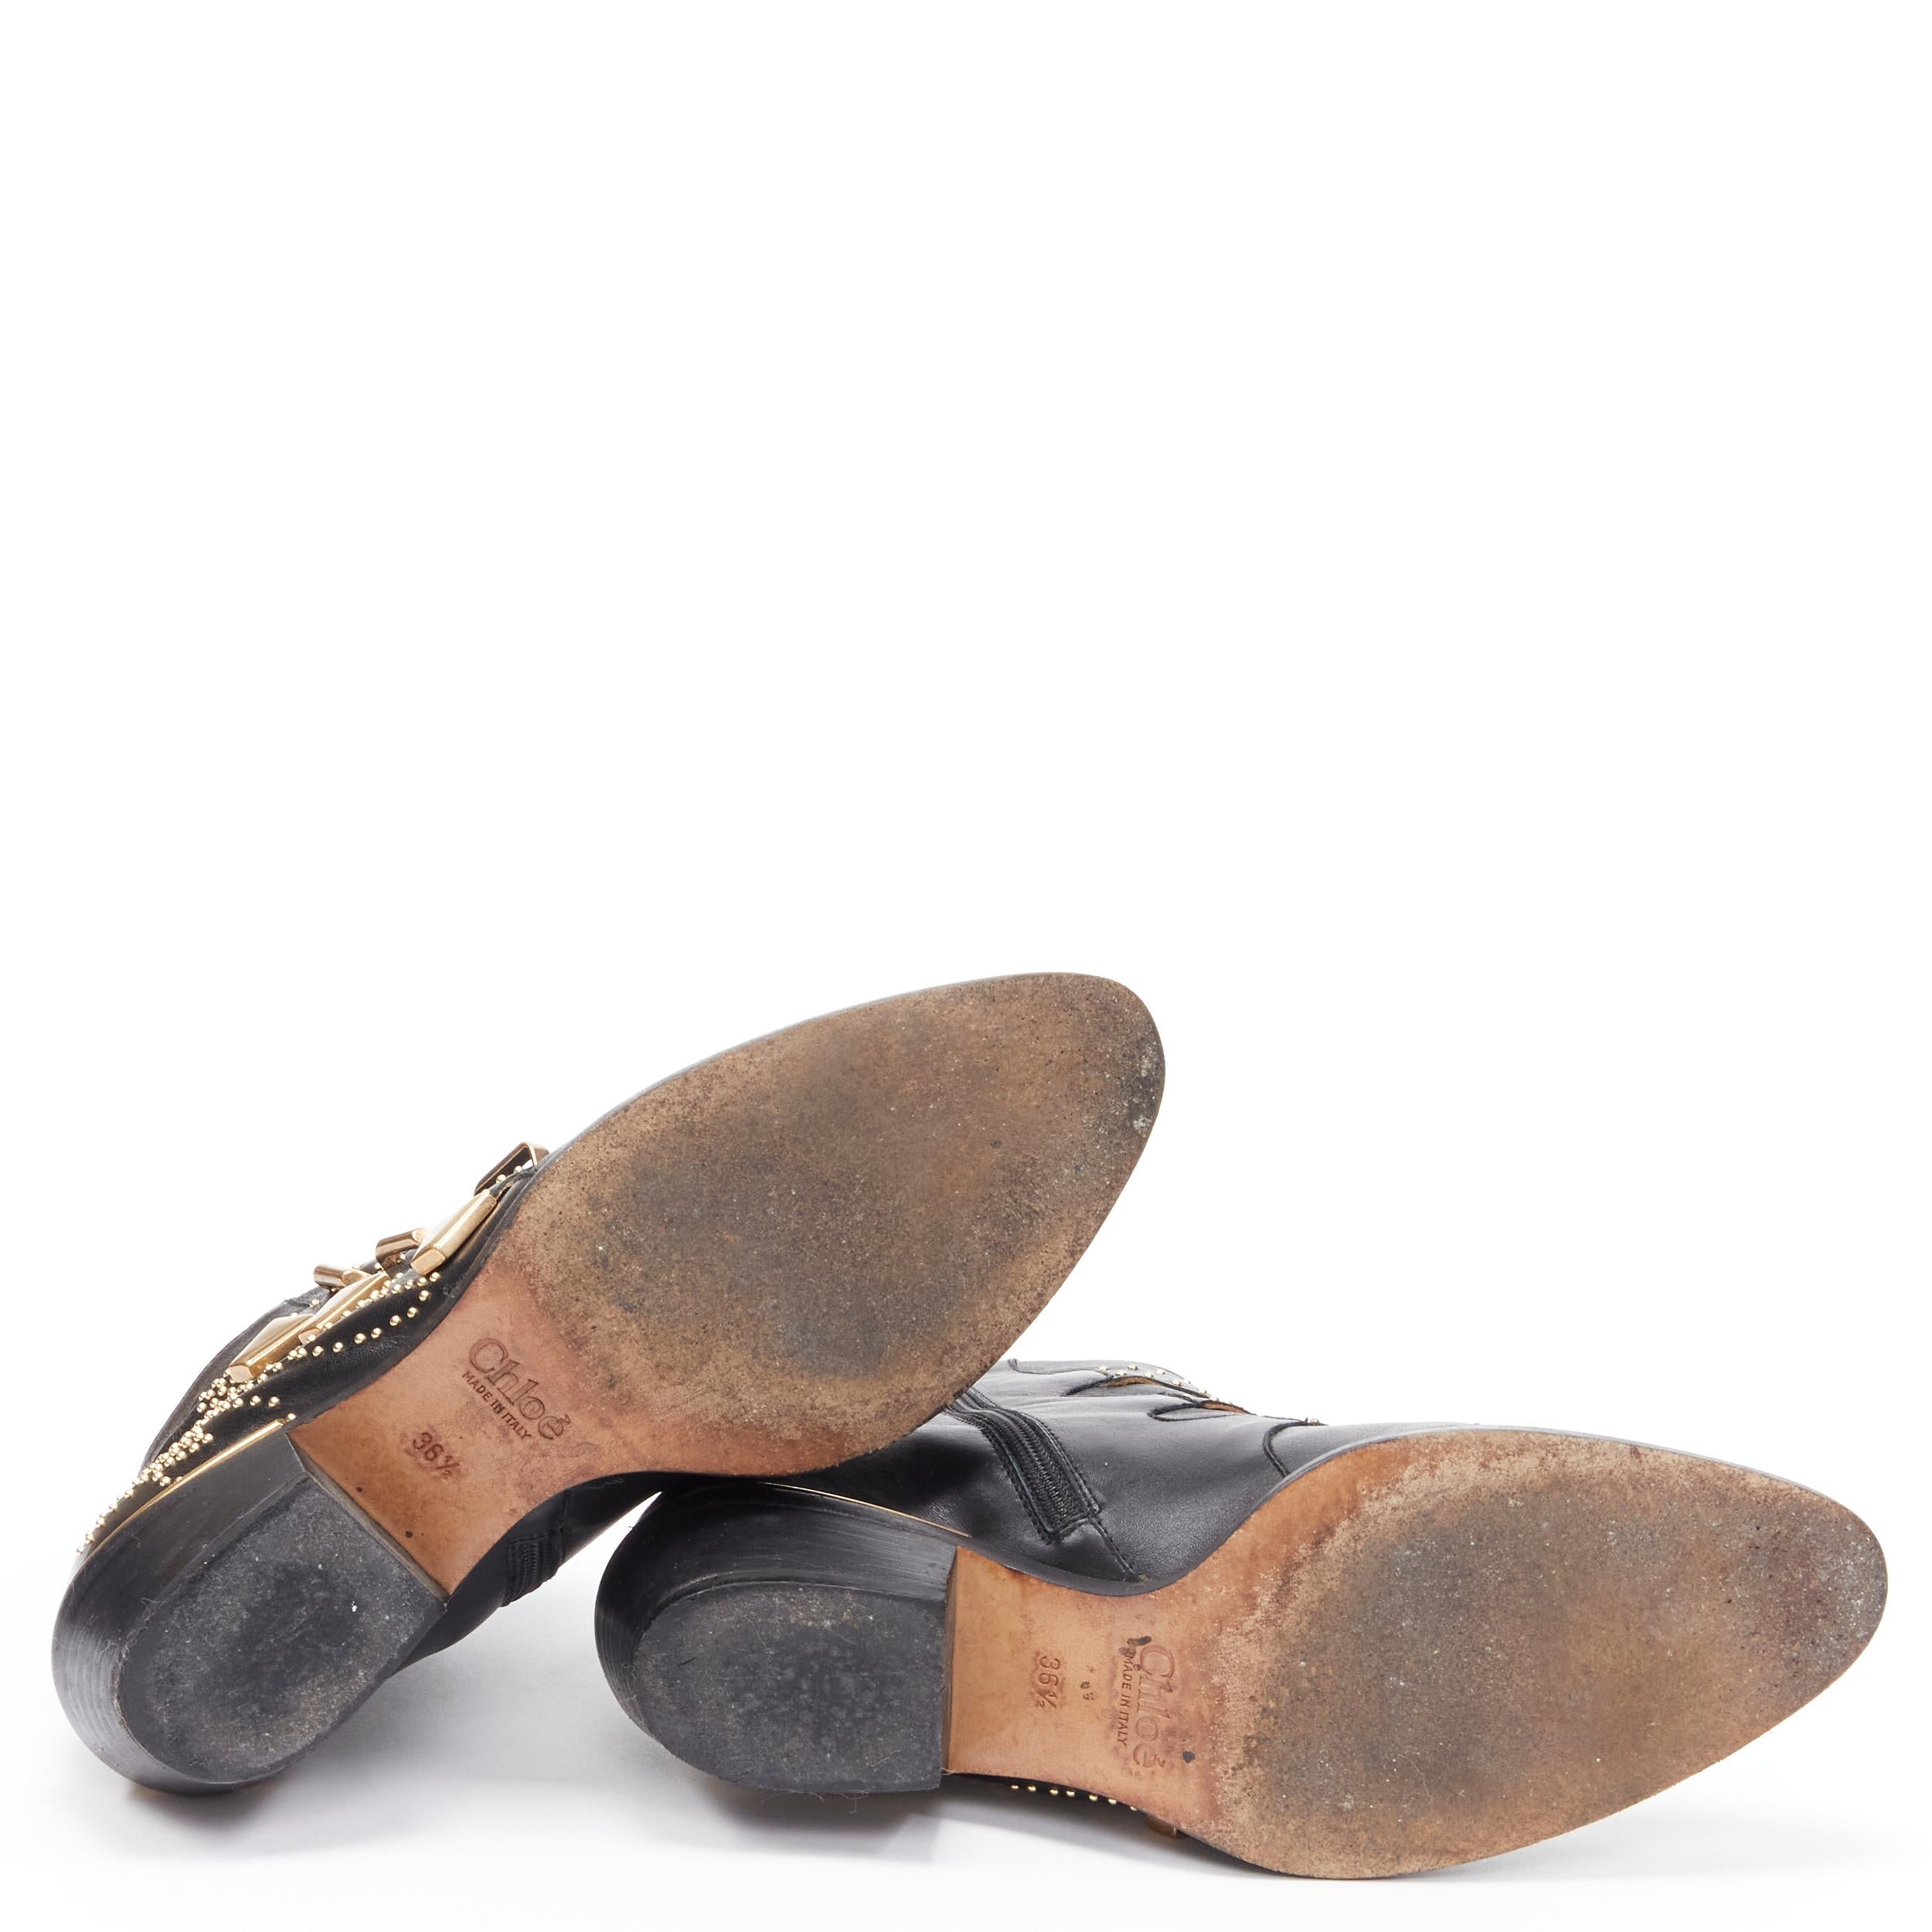 CHLOE Susanna black leather gold floral studded buckle ankle boot EU36.5 6